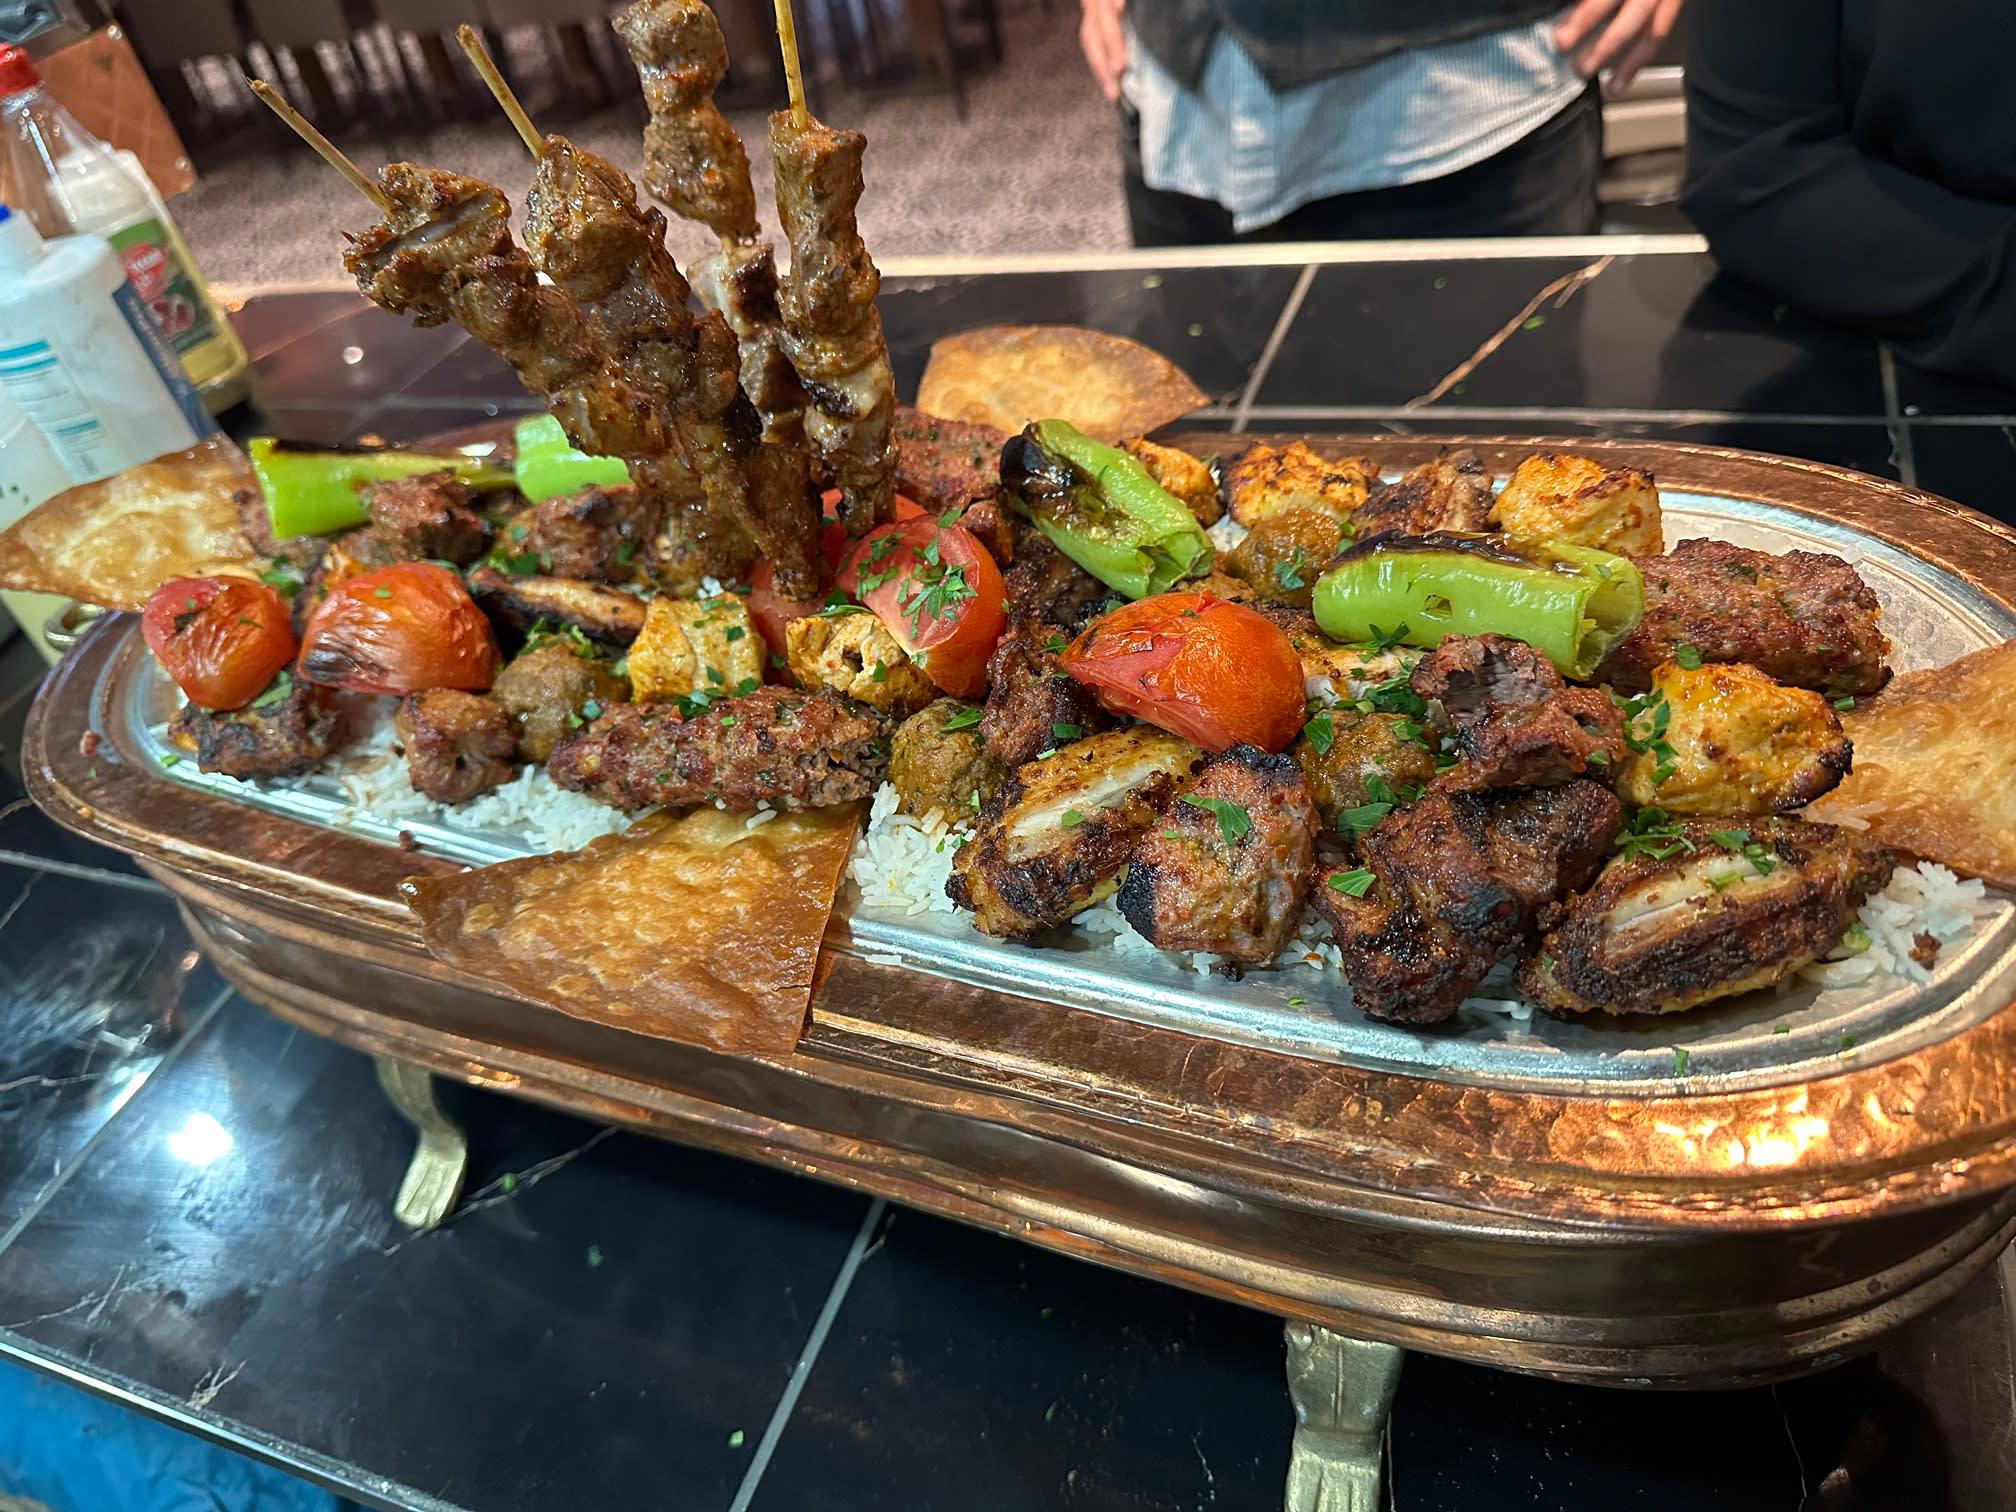 Pasha Turkish Restaurant Sheffield 01142 654414